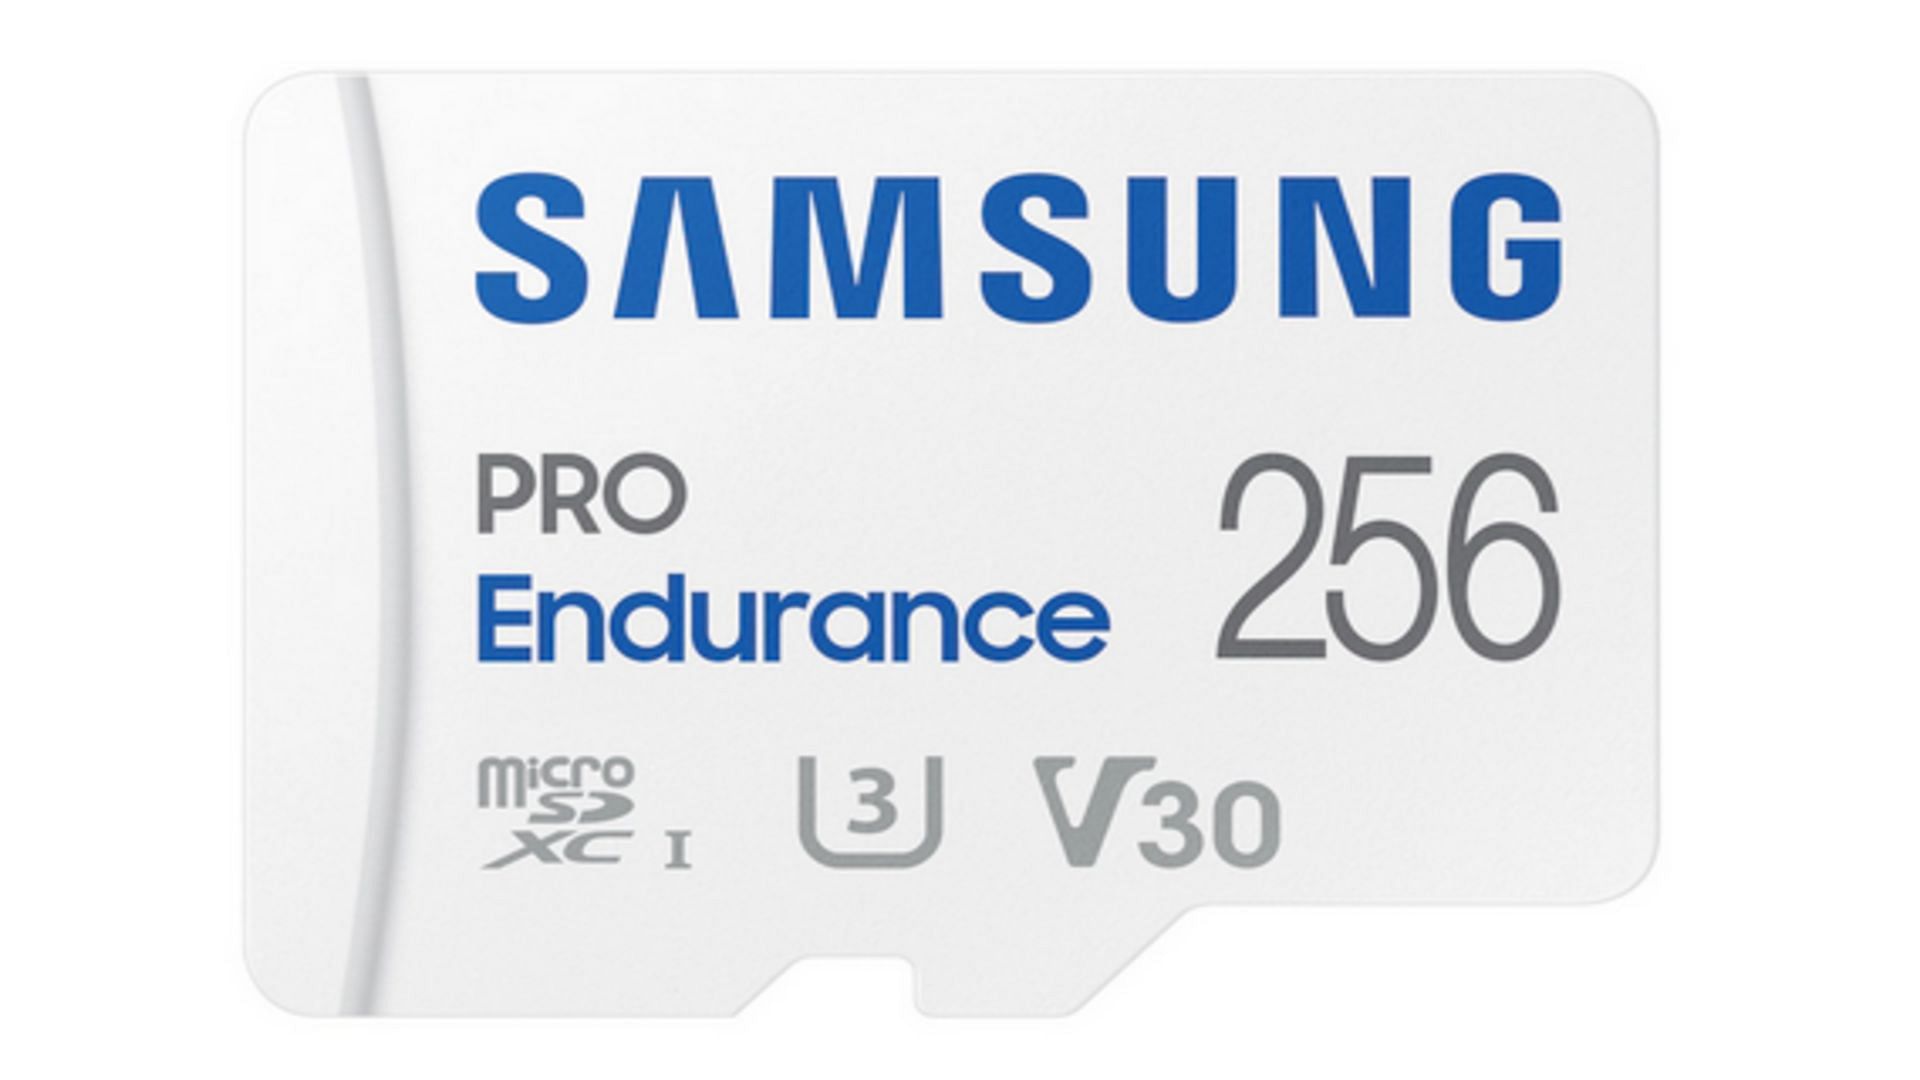 Sams͏ung Pro E͏ndurance 256 G͏B microSDXC (Image via Samsung)